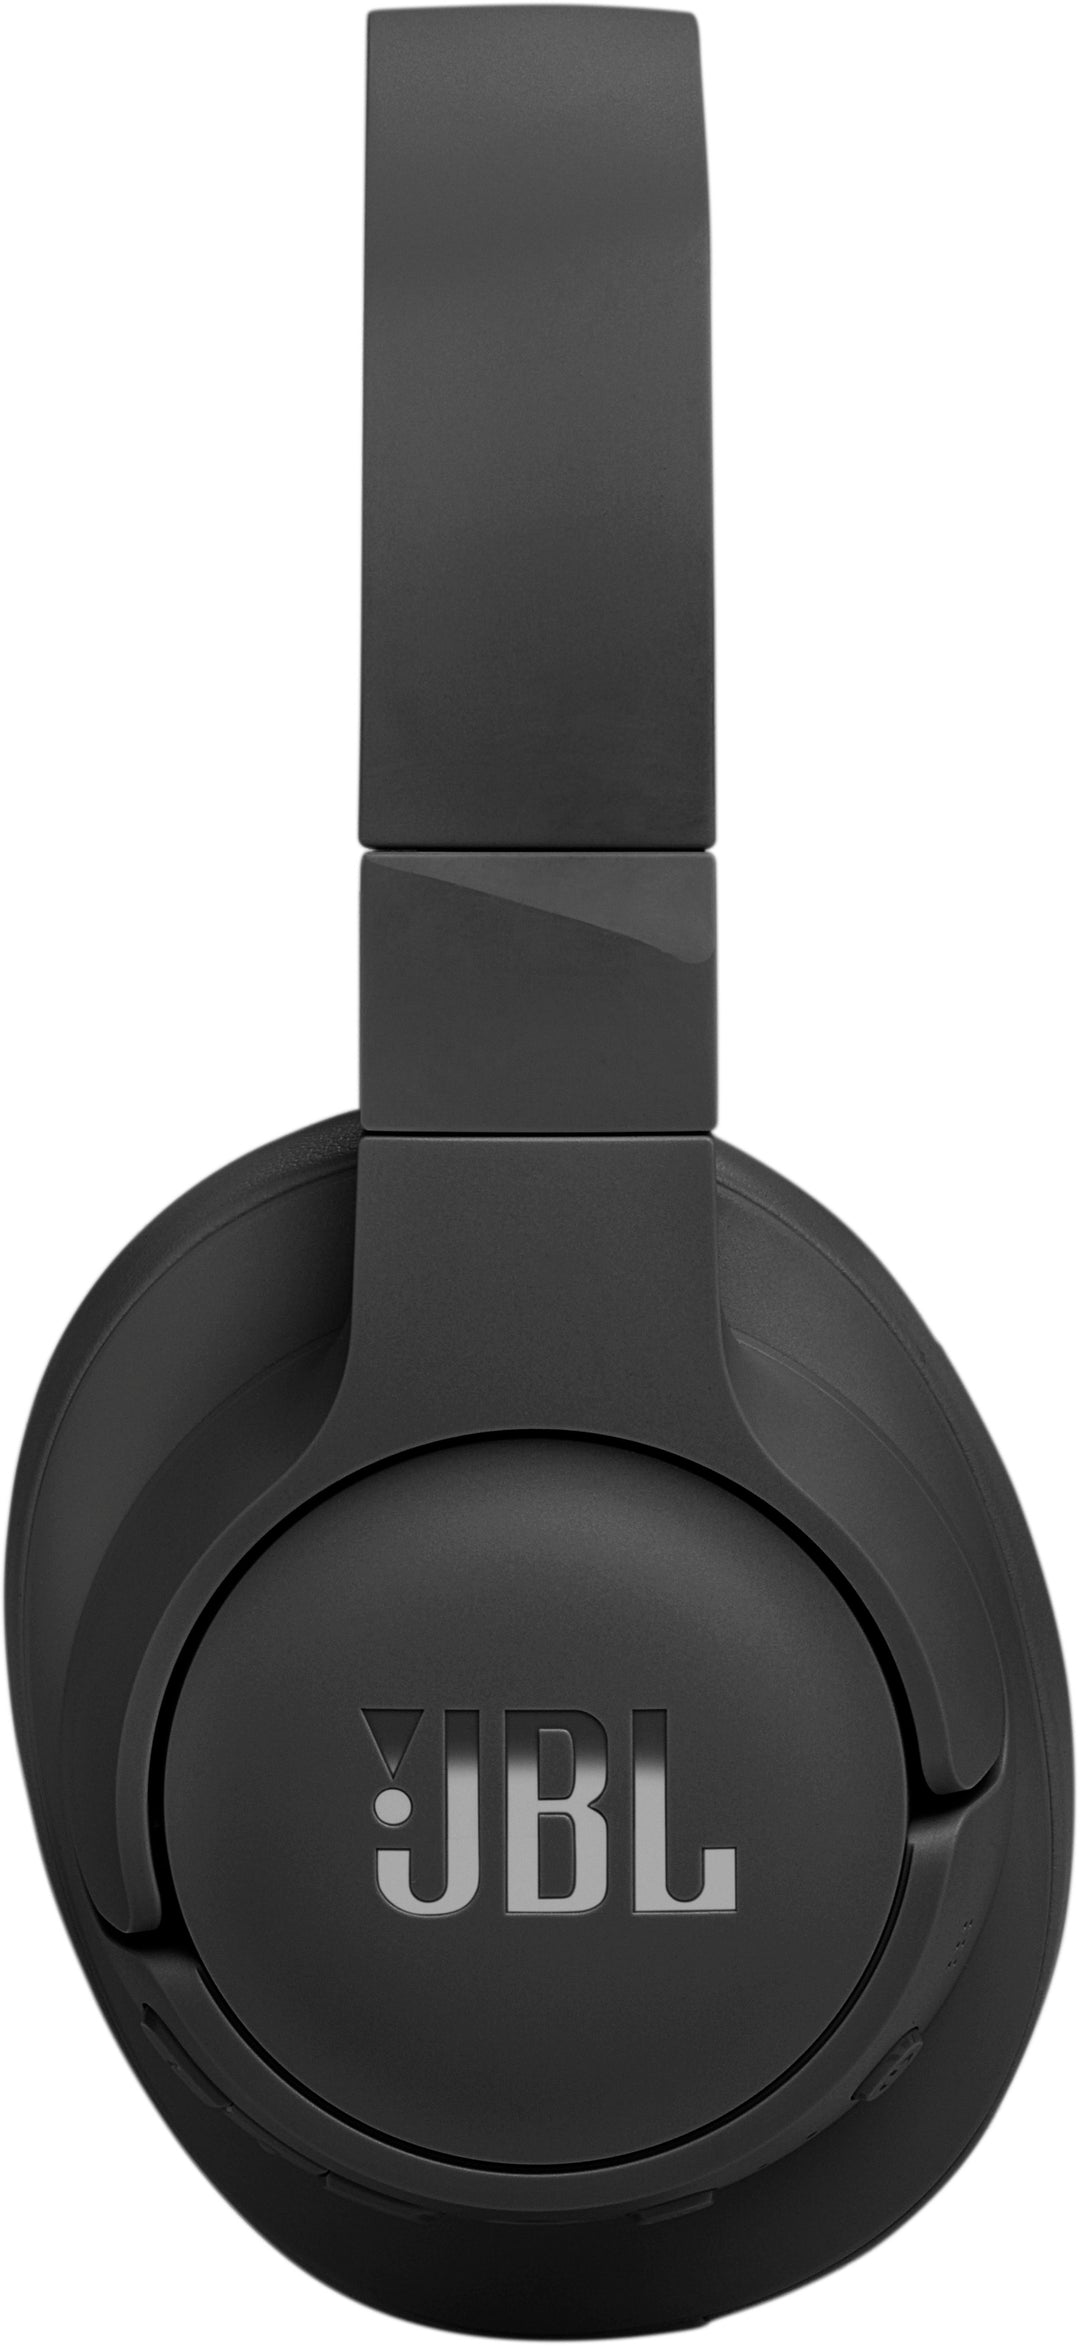 JBL - Adaptive Noise Cancelling Wireless Over-Ear Headphone - Black_2